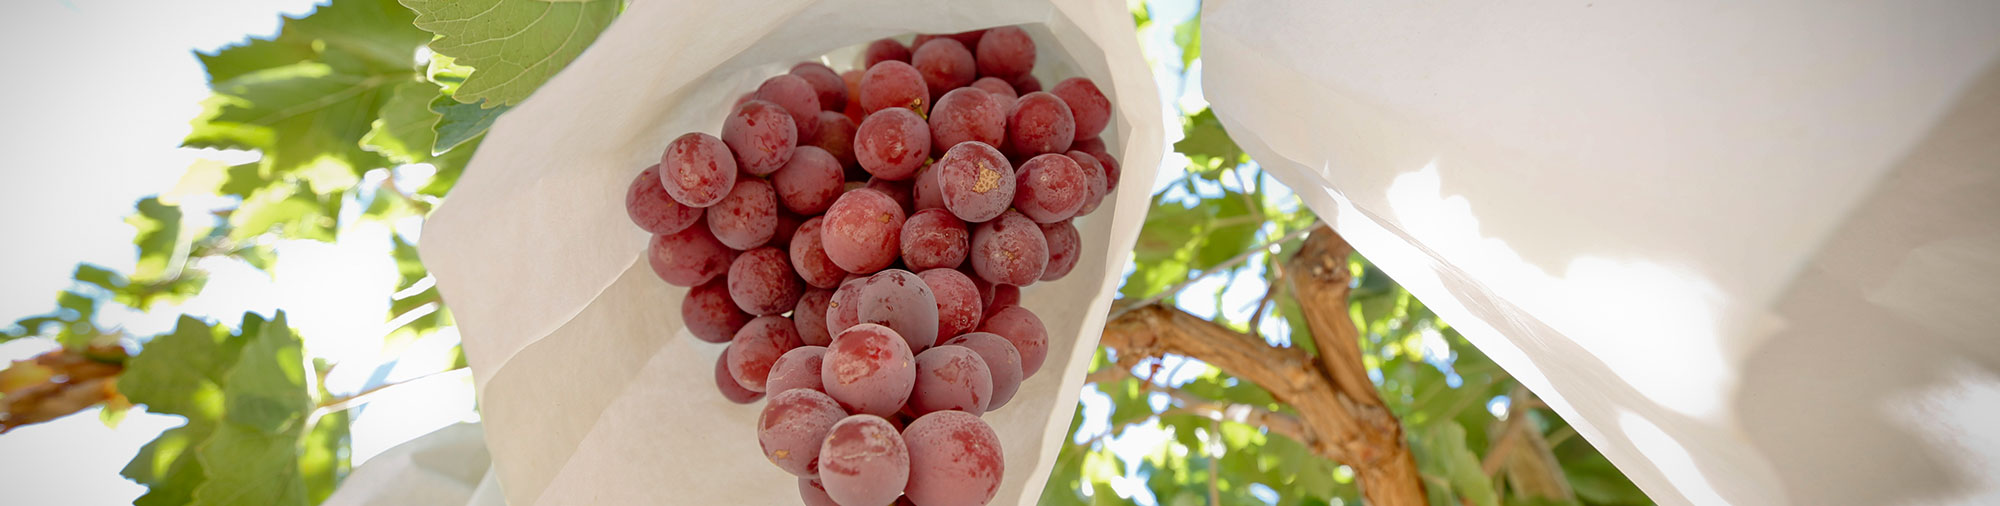 frutas falco uva de mesa vinalopo novelda alicante red globe